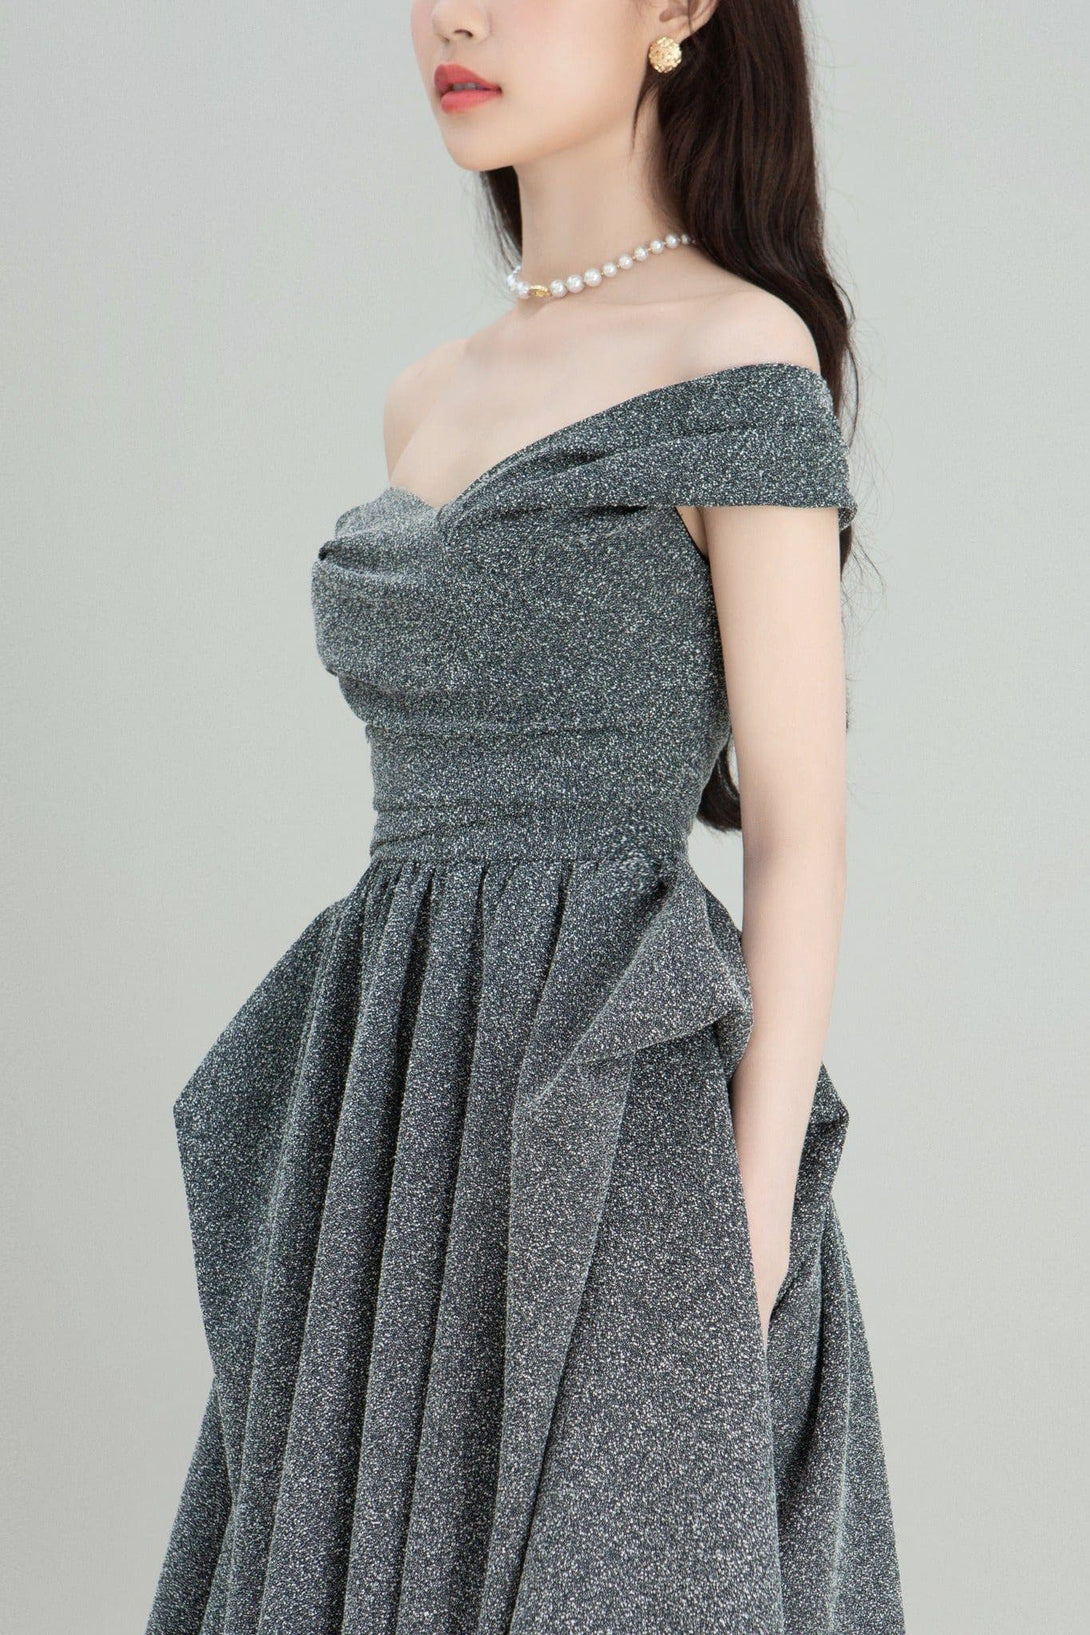 DARLING DIVA Kirei Asymmetric Shoulder Dress